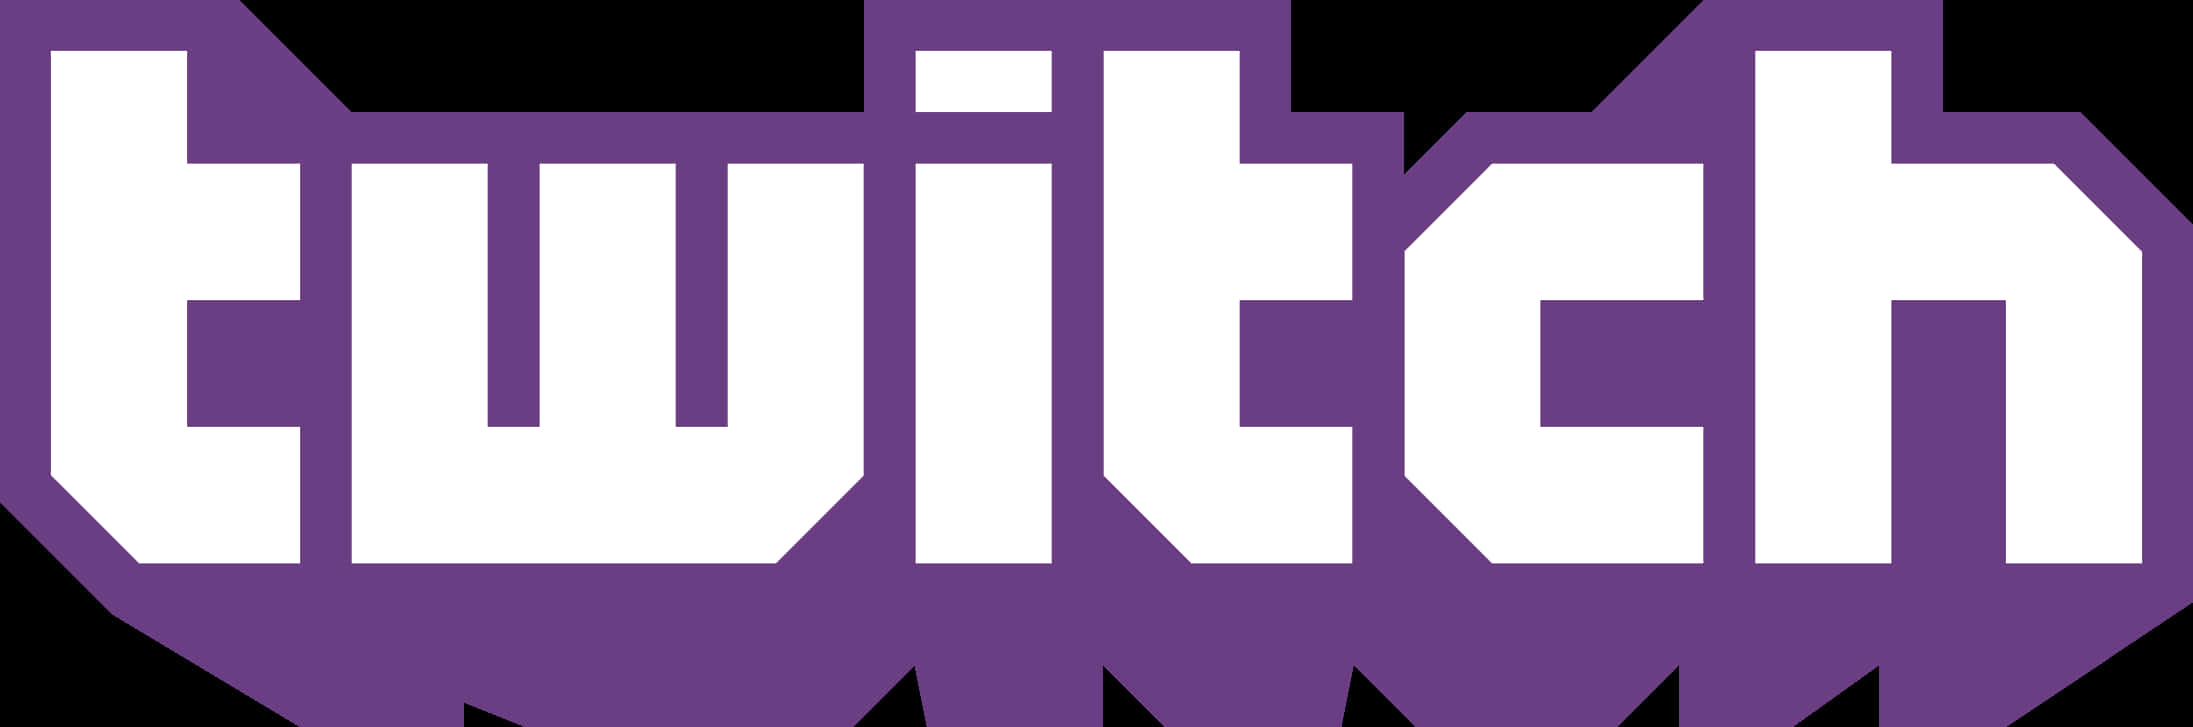 Twitch Logo Purple White PNG image